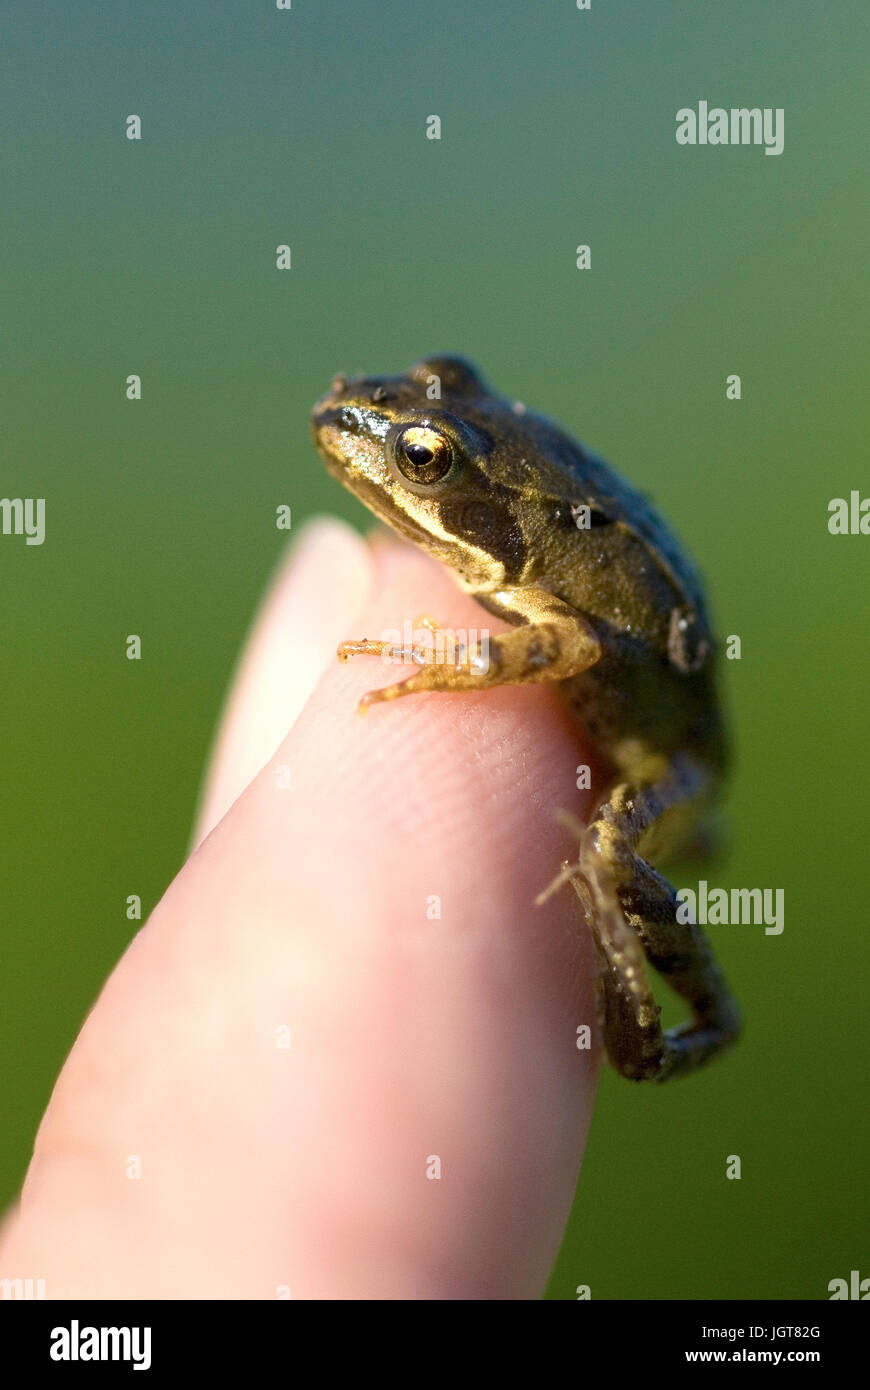 Juvenile Common Frog Stock Photo